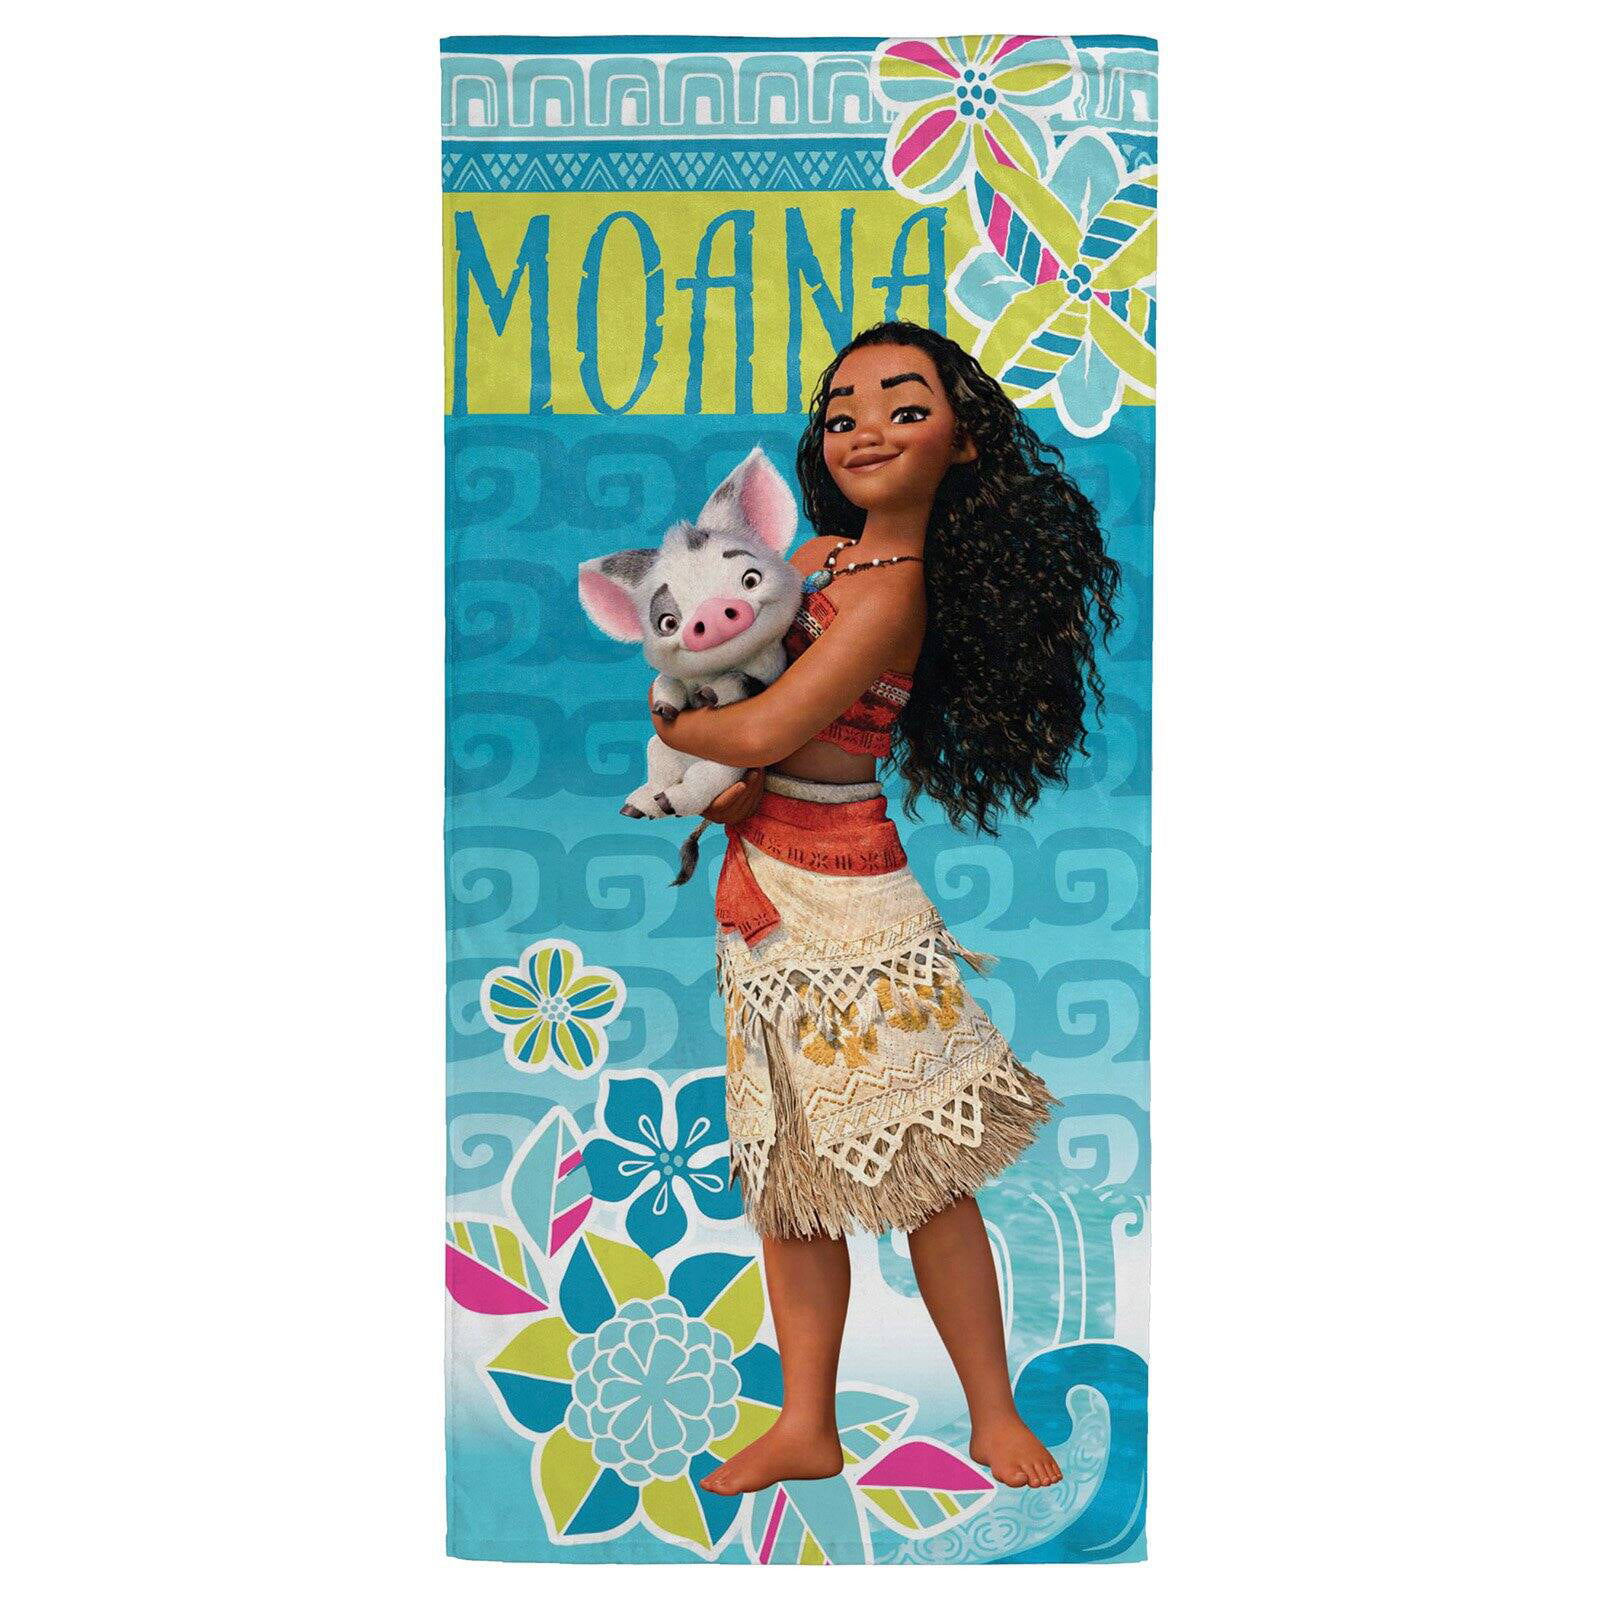 Disney Moana Girl's Colorful Beach Towel Bath Cotton Soft Swim Cartoon New Large 